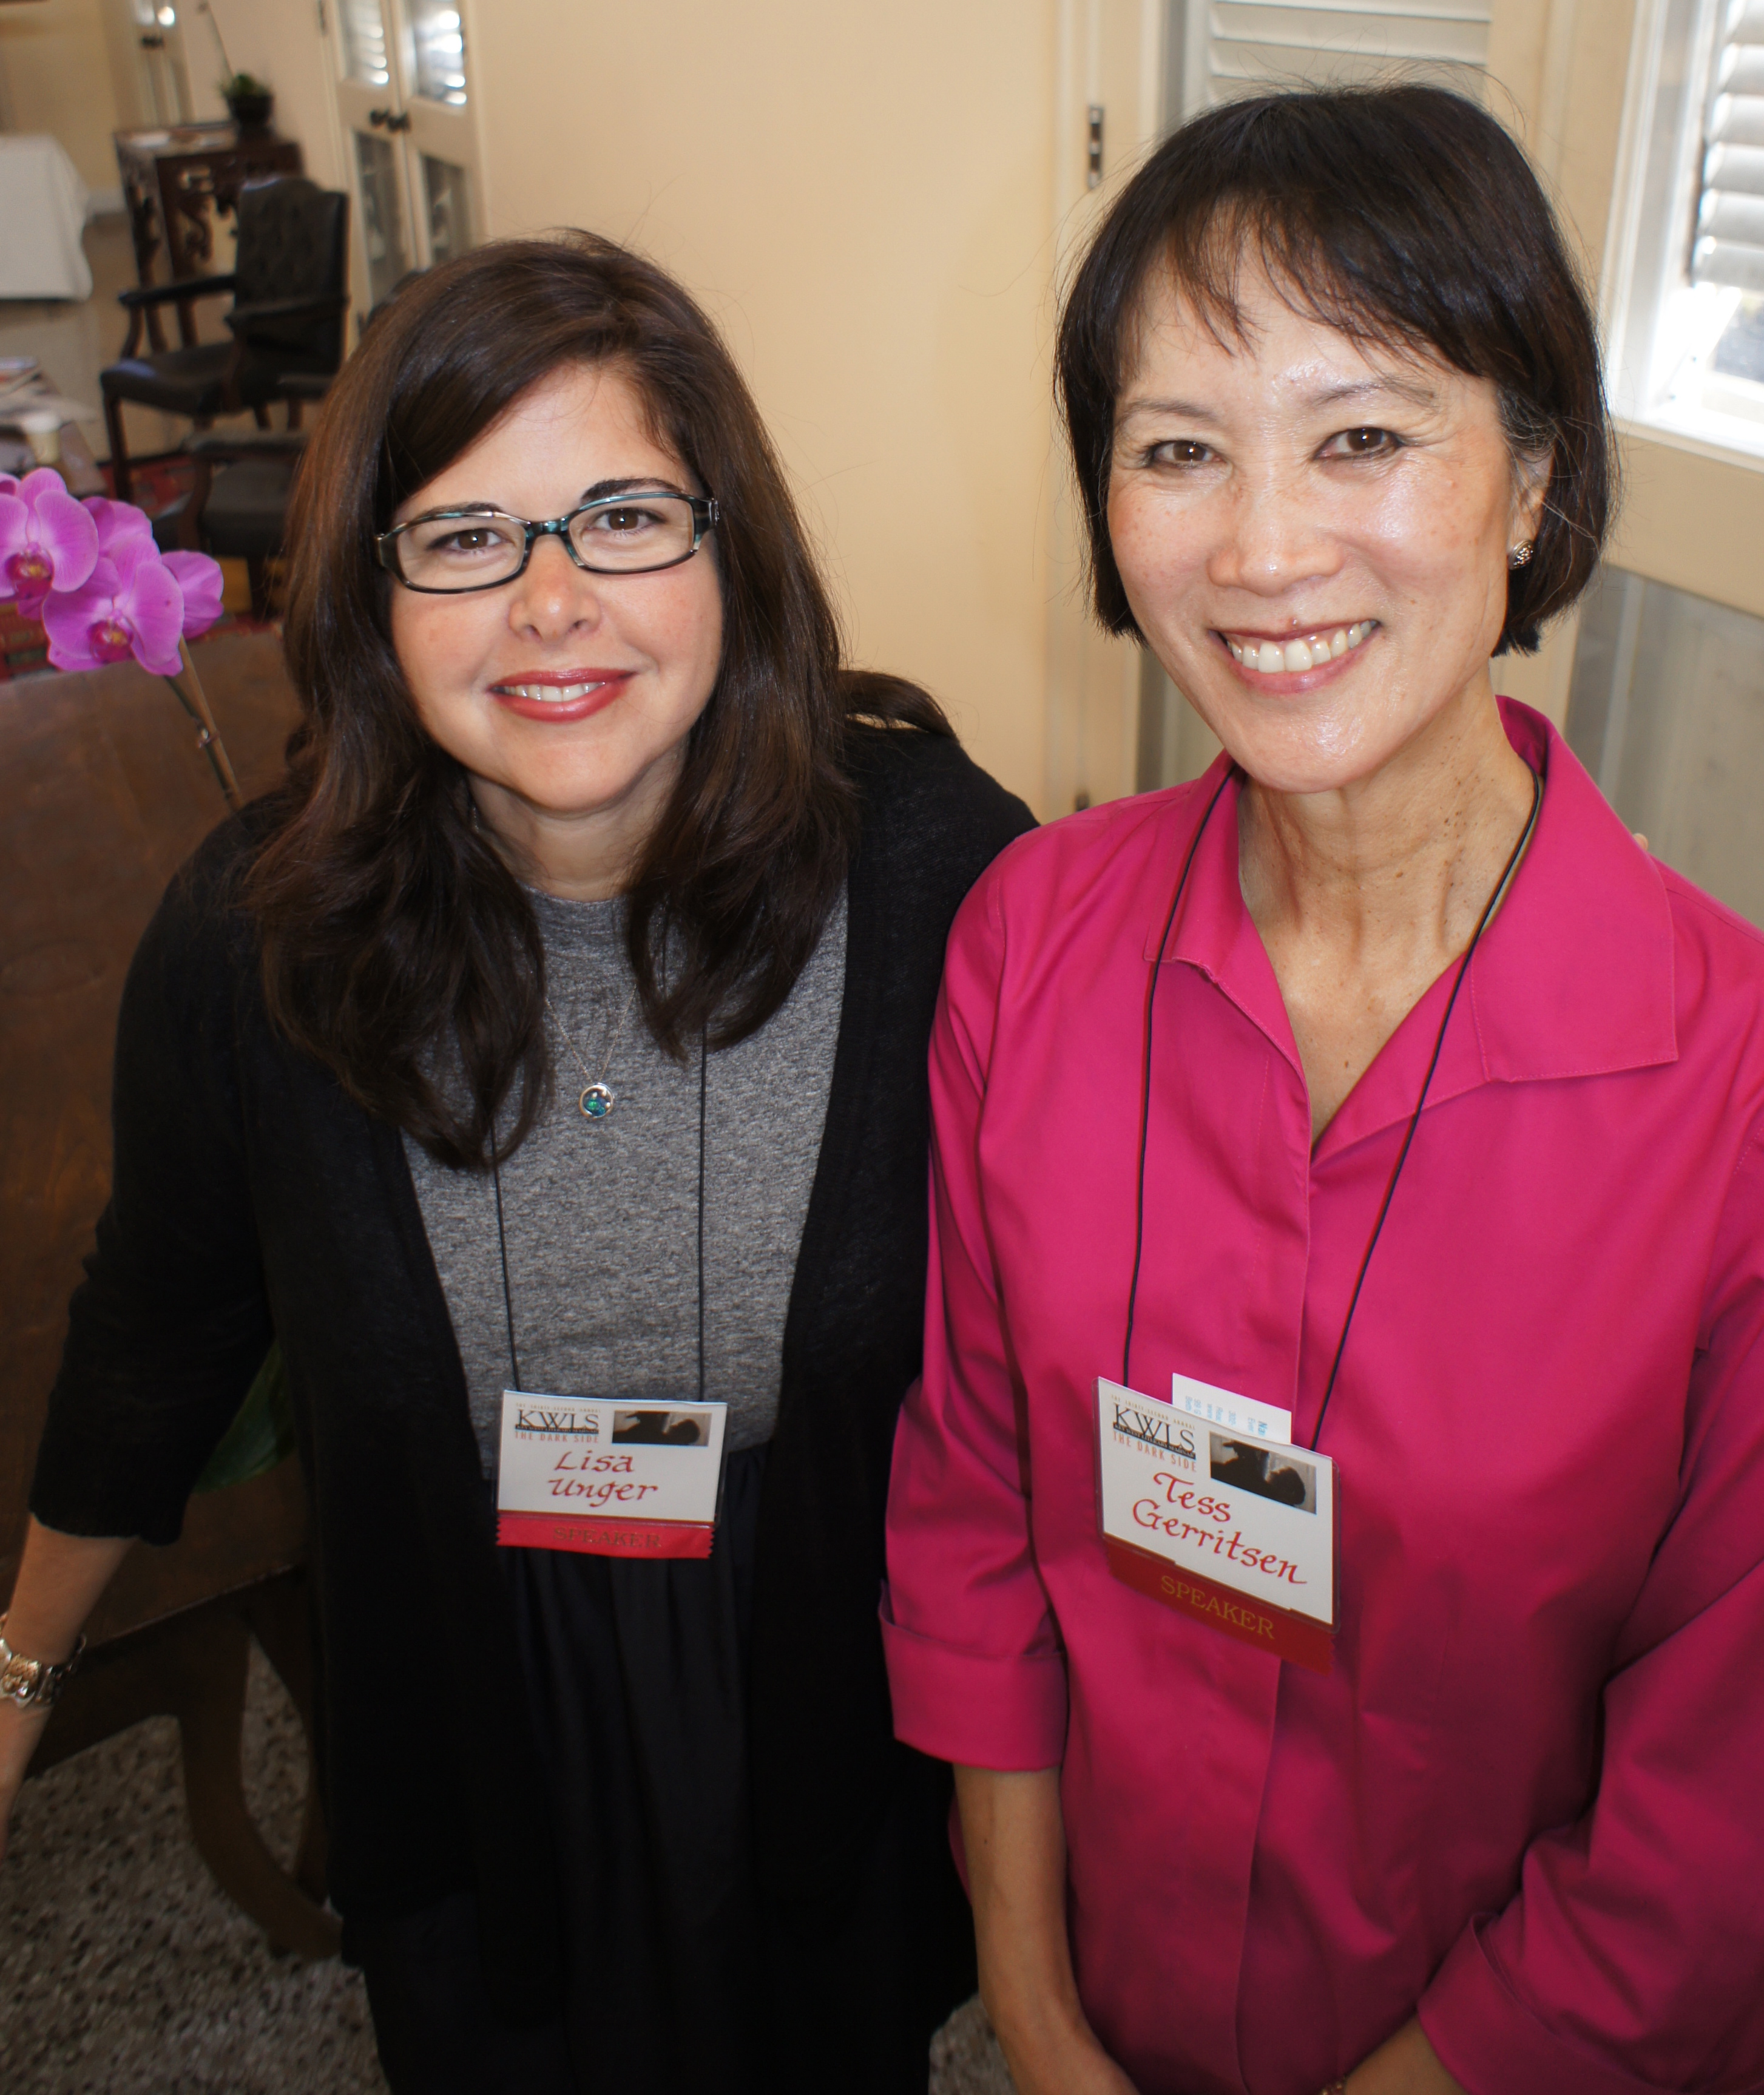  Tess Gerritsen and Lisa Unger at 2014 Key West Literary Seminar 